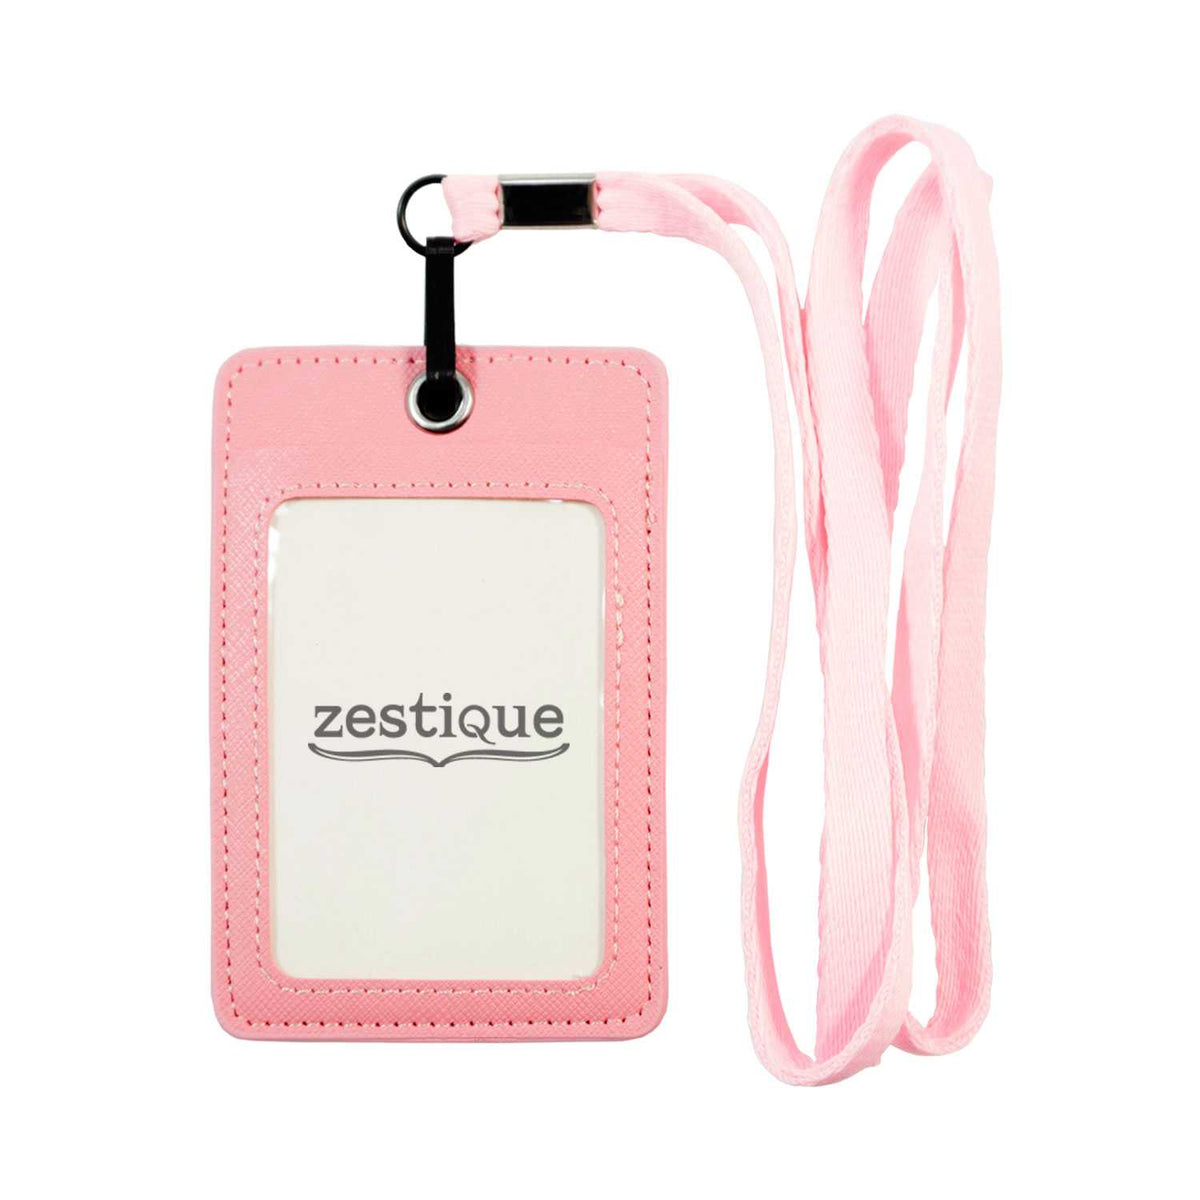 Unisex ID & Credit Cards Holder Wallet with Lanyard - Light Pink - Zestique